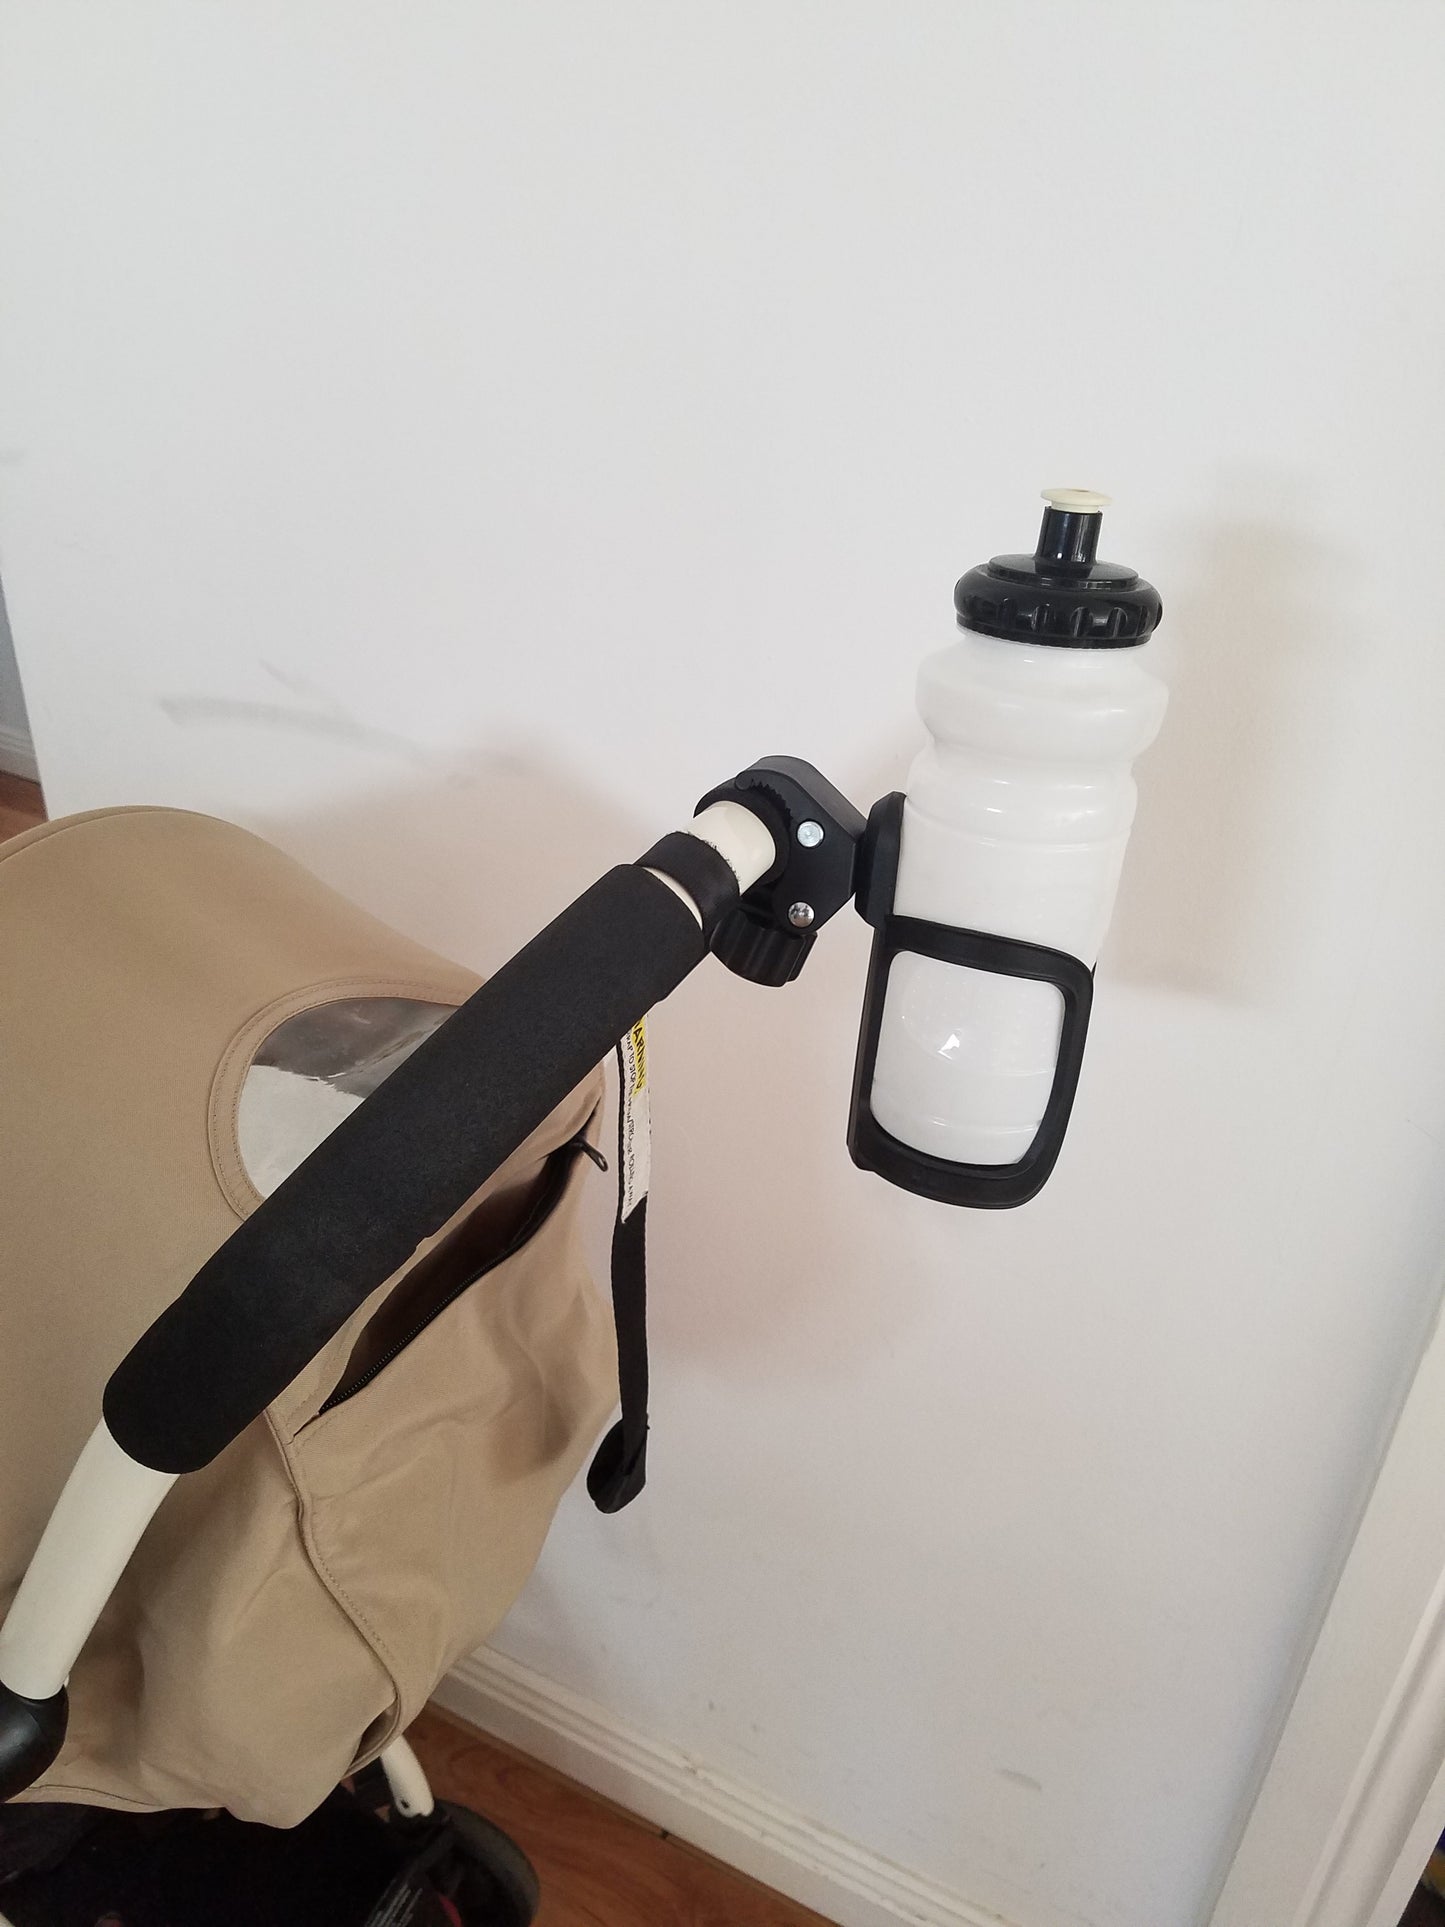 Baby Stroller Cup Holder Drink Bag Milk Bottle Phone Pram Golf Buggy Wheelchair